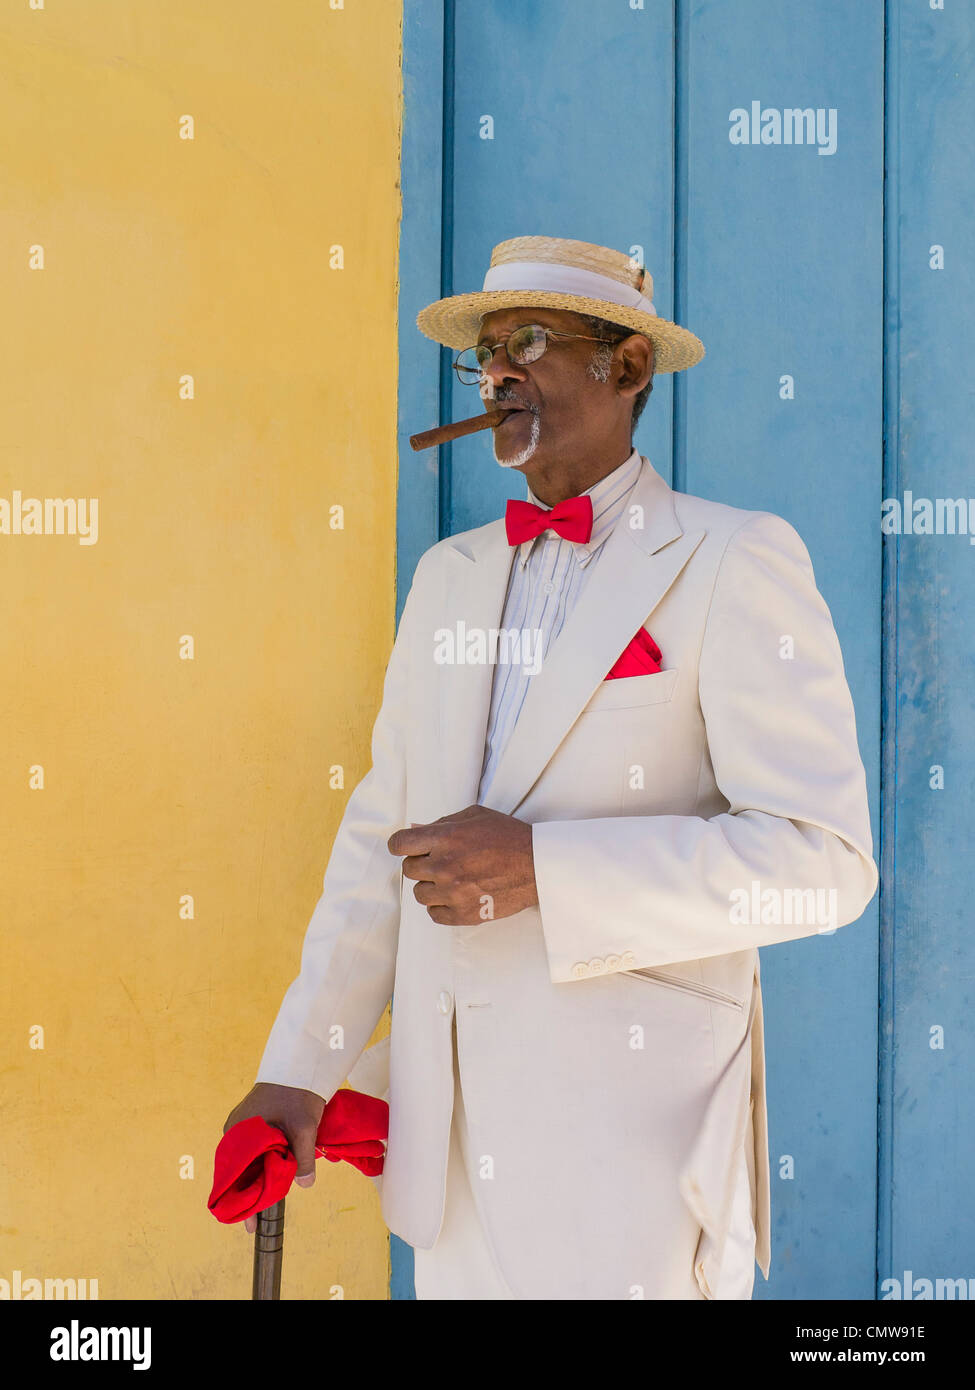 A dark elderly Cuban gentleman in a straw boater hat, white suit, red